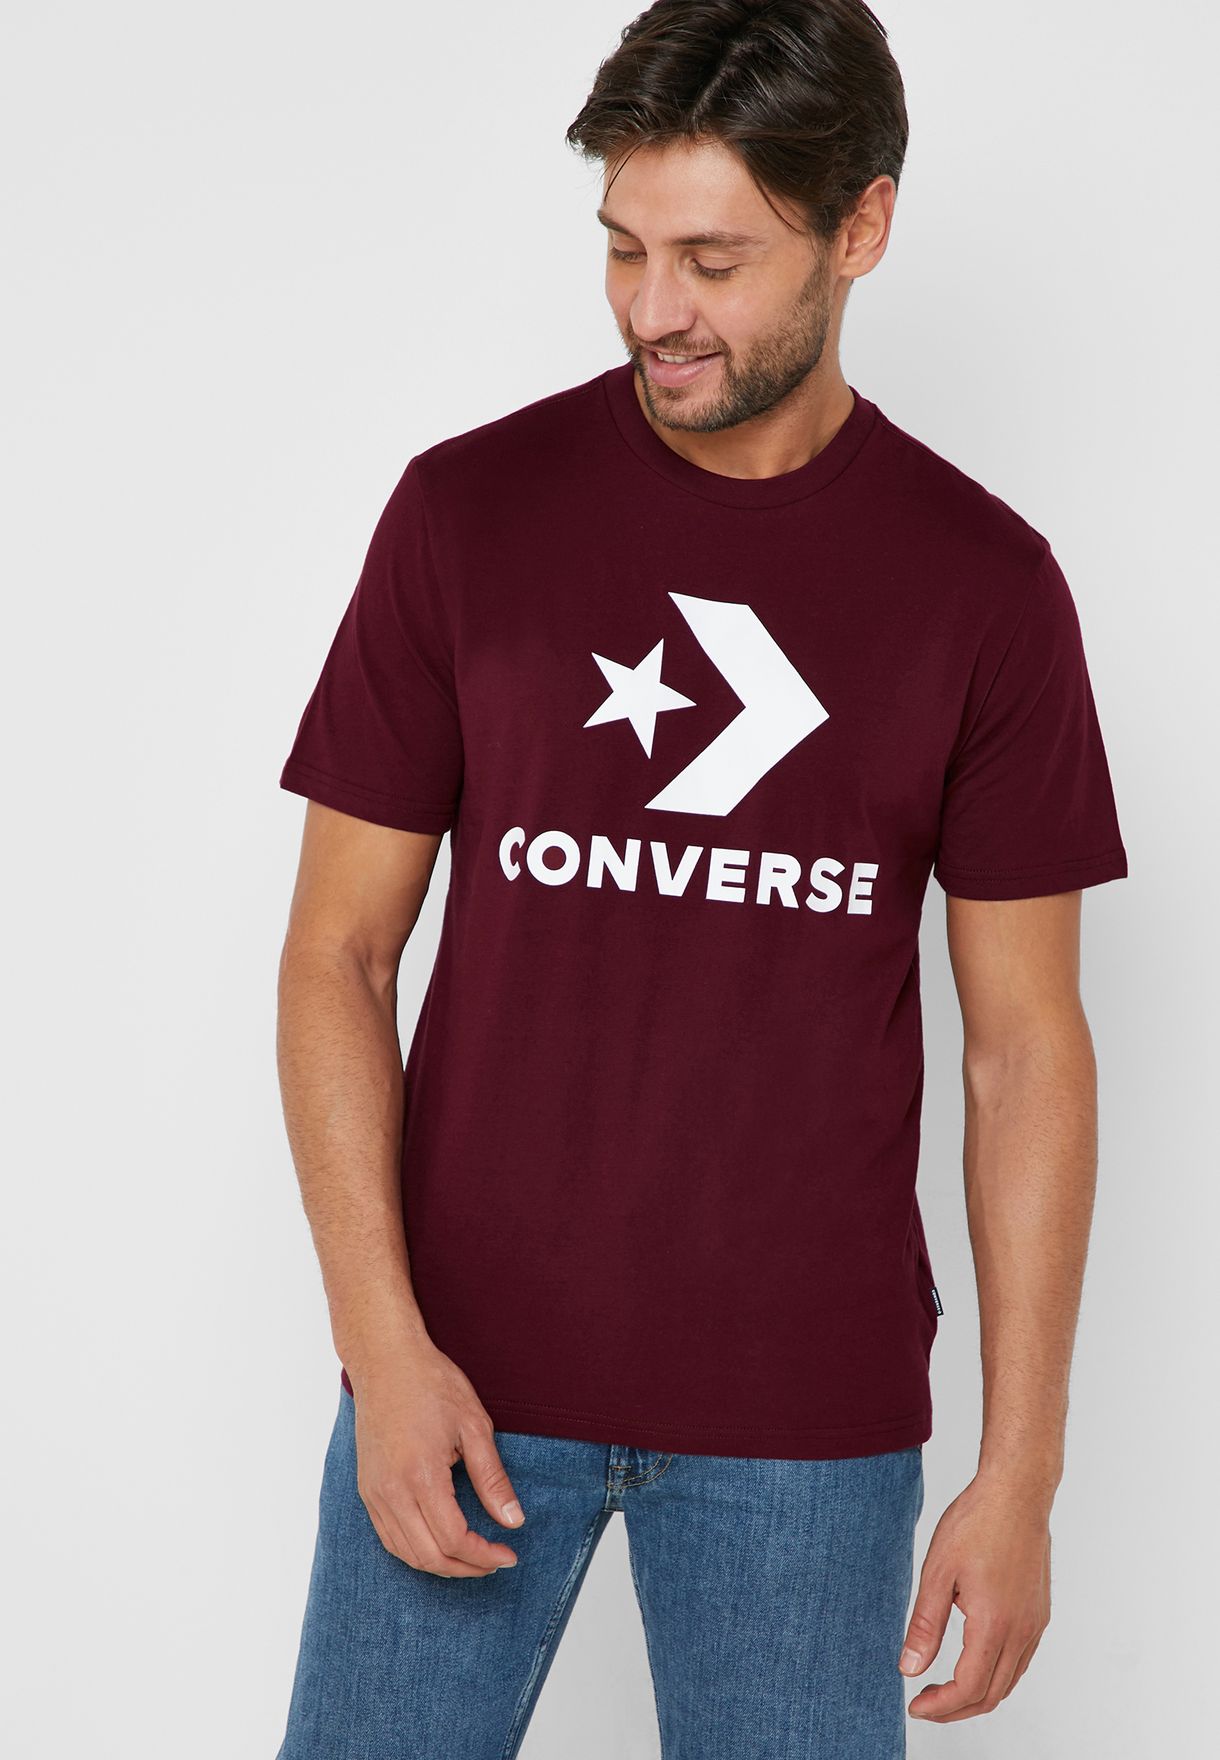 Buy Converse burgundy Star Chevron T 